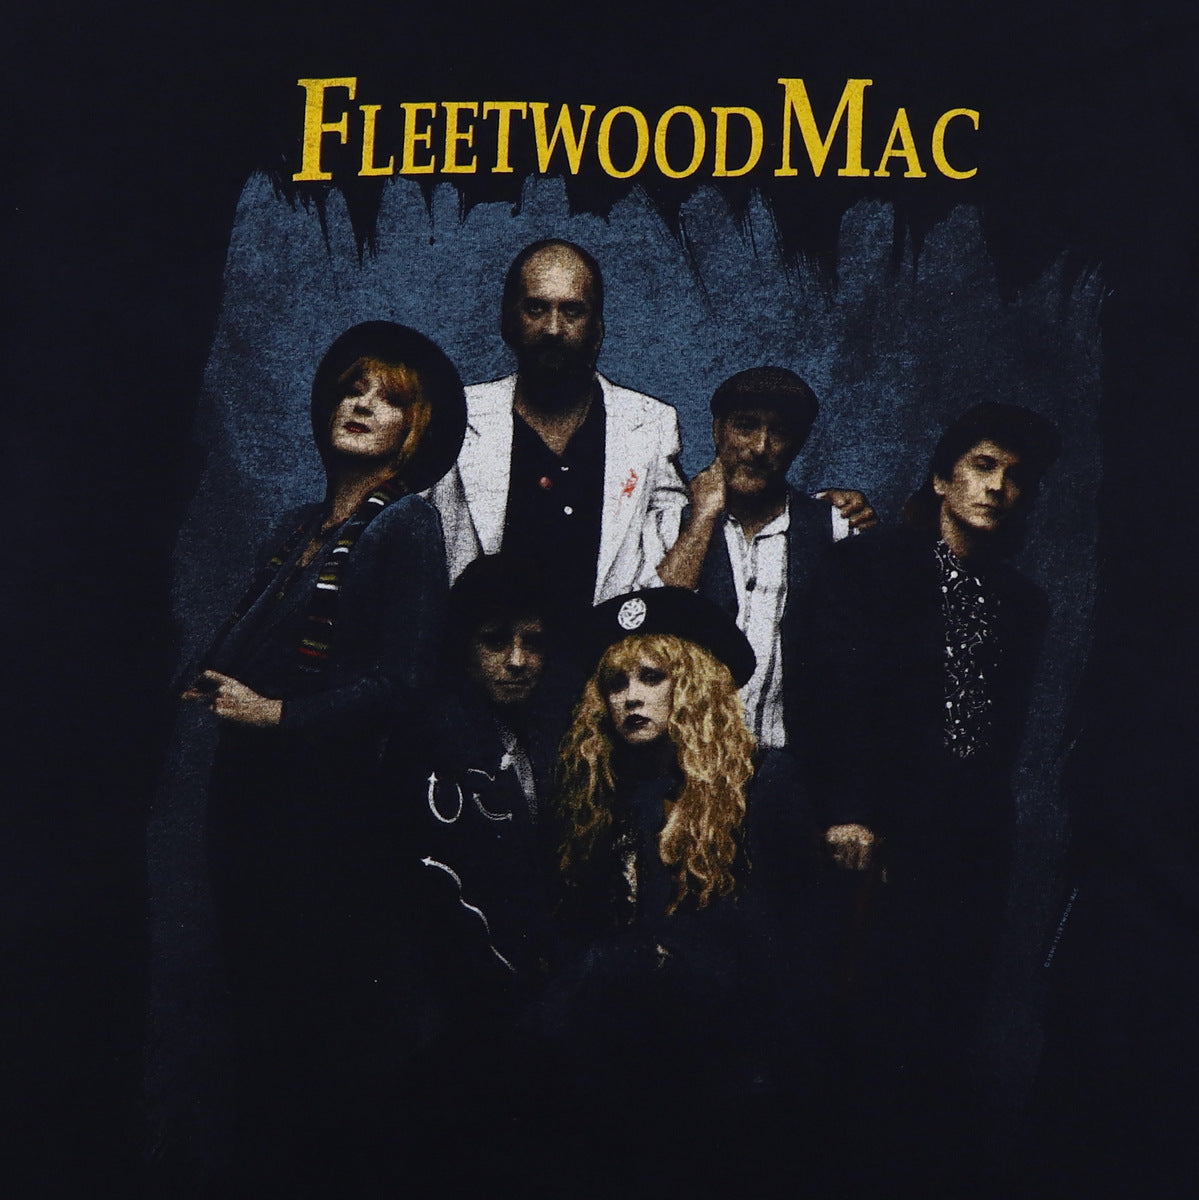 1990 Fleetwood Mac Shirt